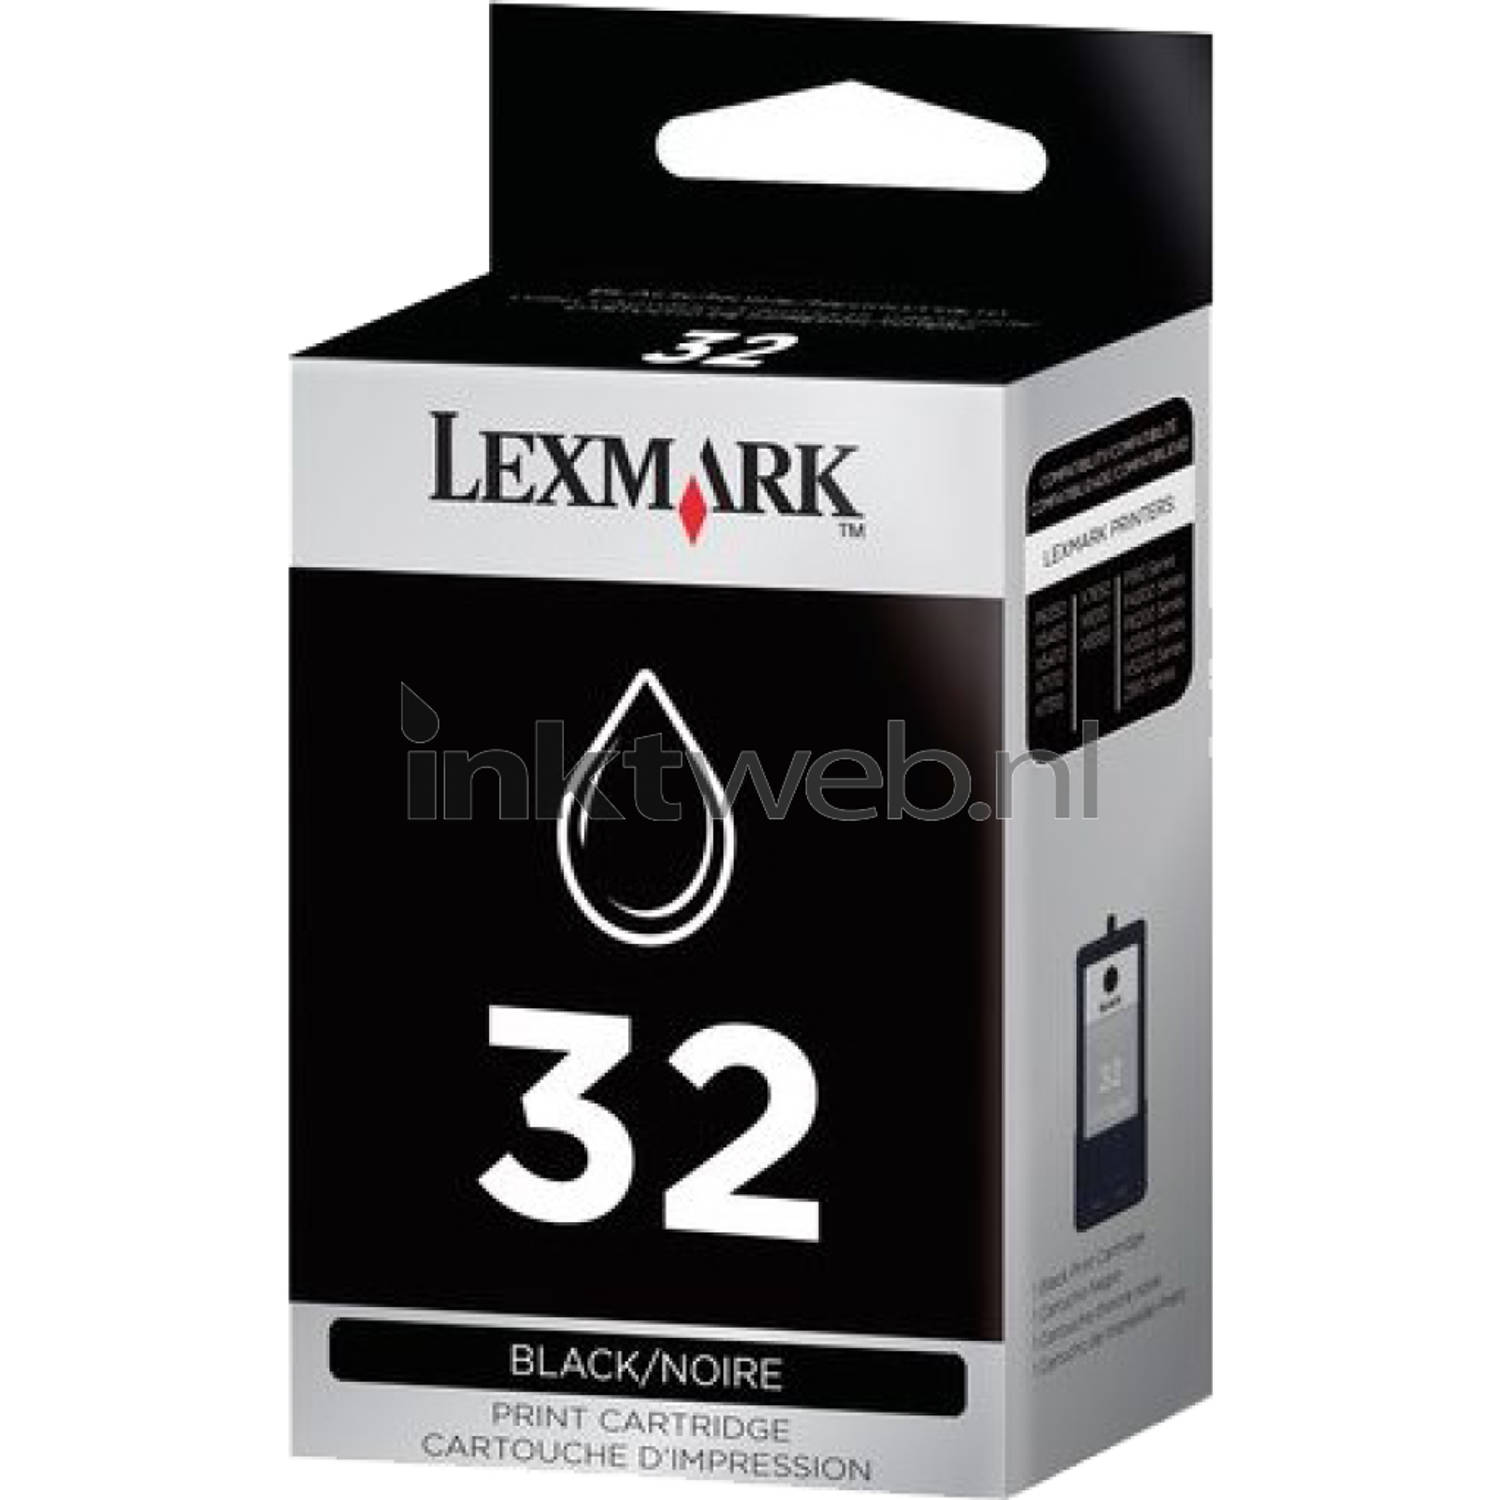 Lexmark No.32 Black Print Cartridge (18CX032)